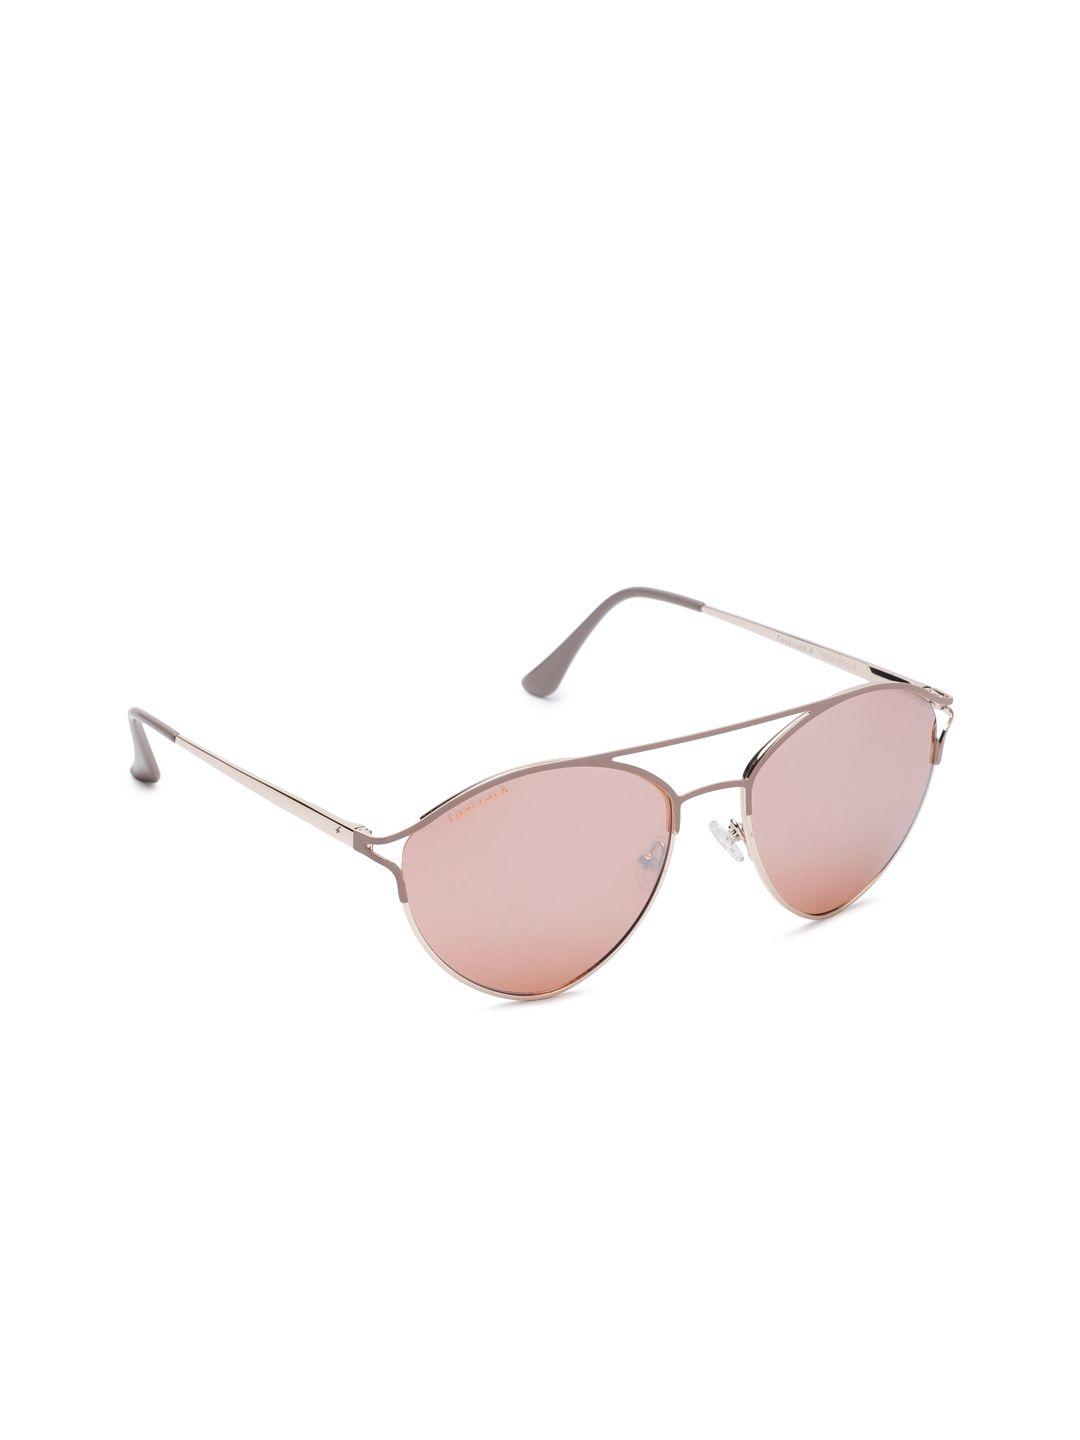 fastrack women oval sunglasses nbm185yl1f